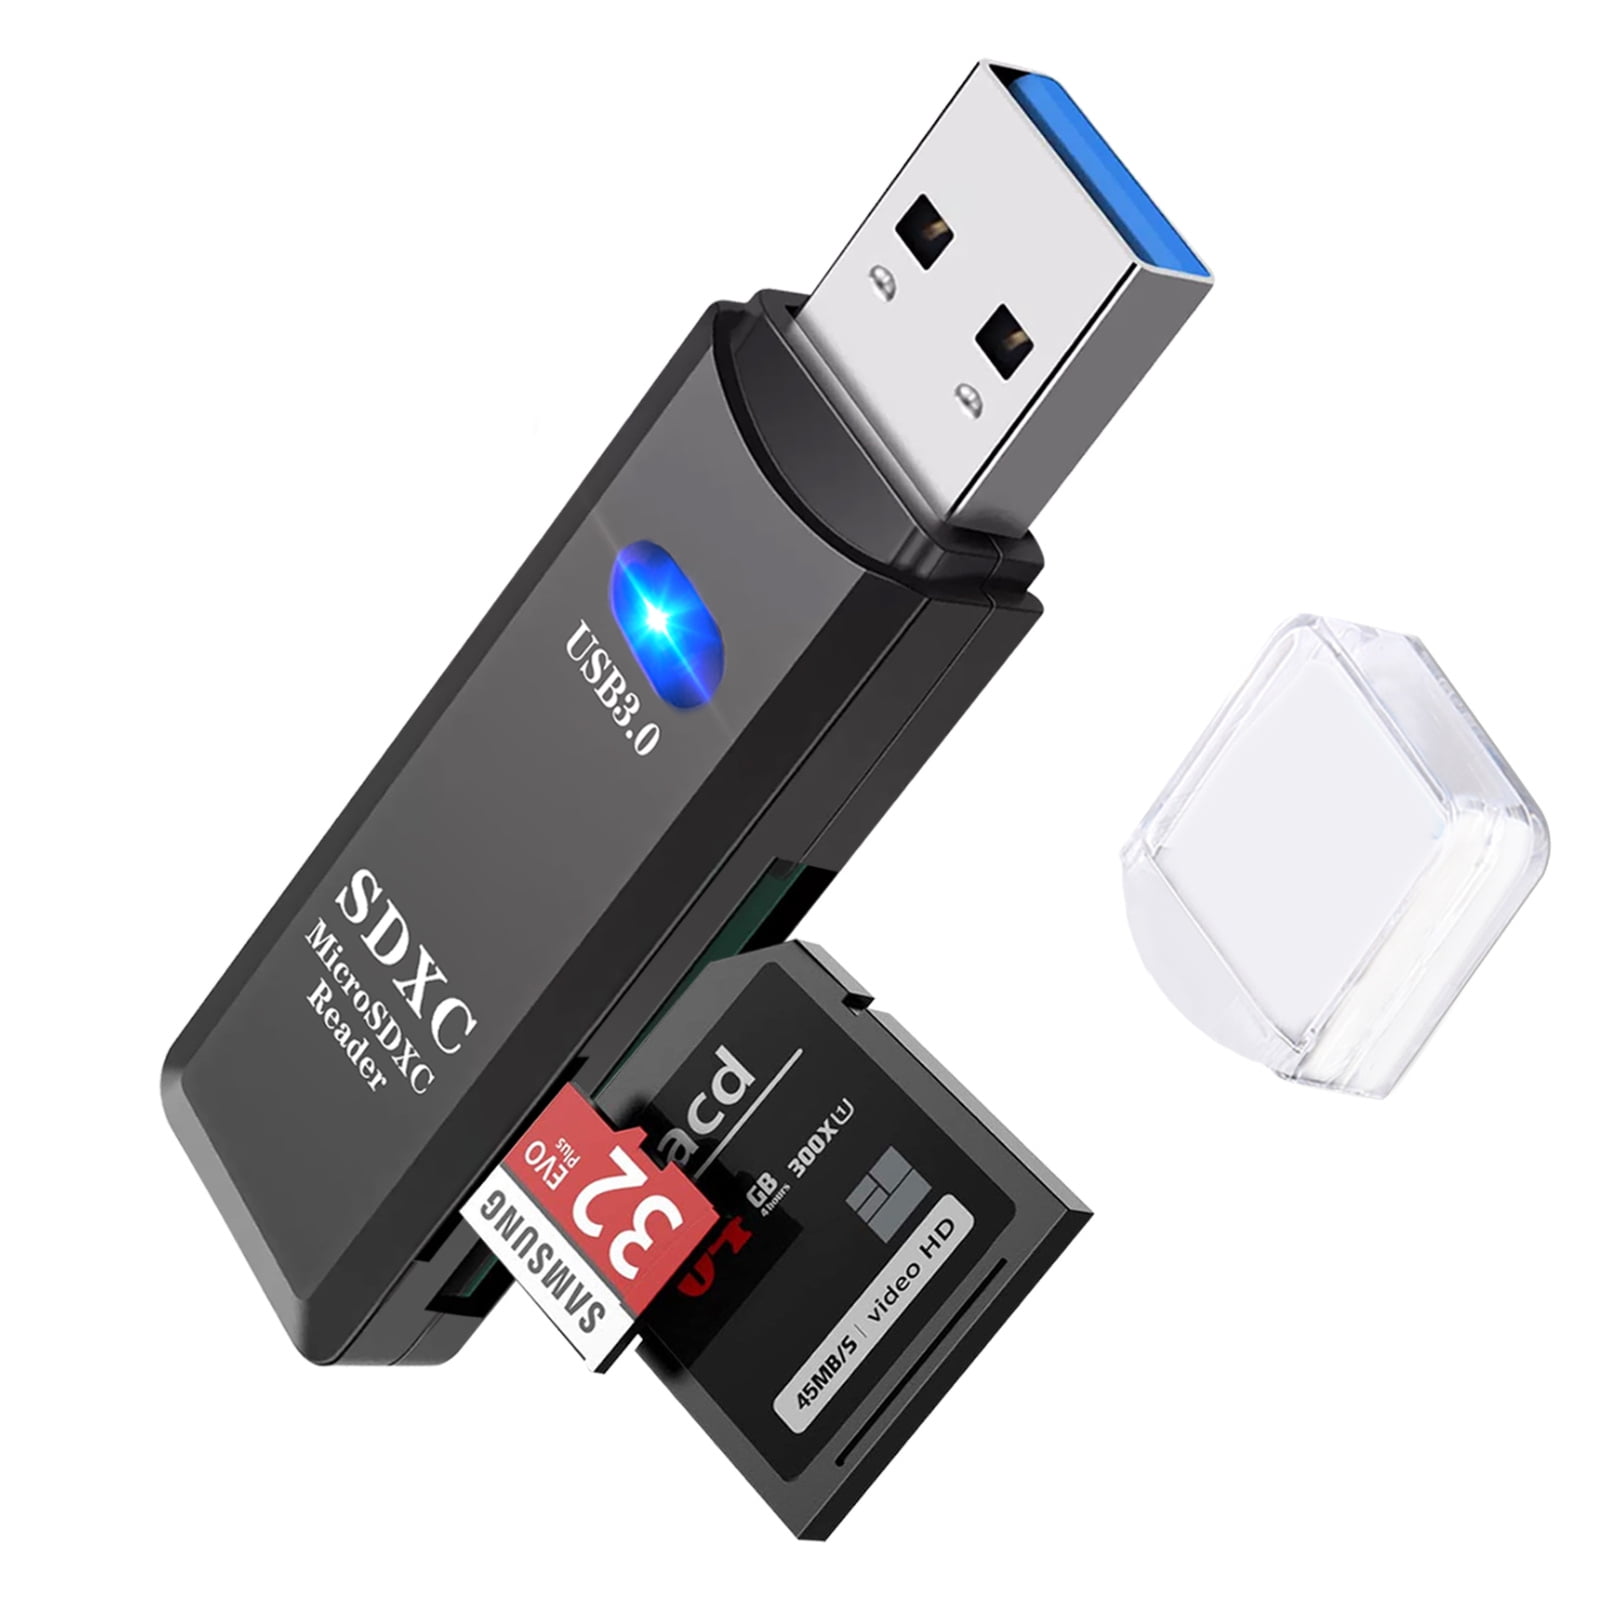 SDXC USB 3.0 Card Reader Micro SD SDHC cable OTG F huawei mediapad t2 10.0 